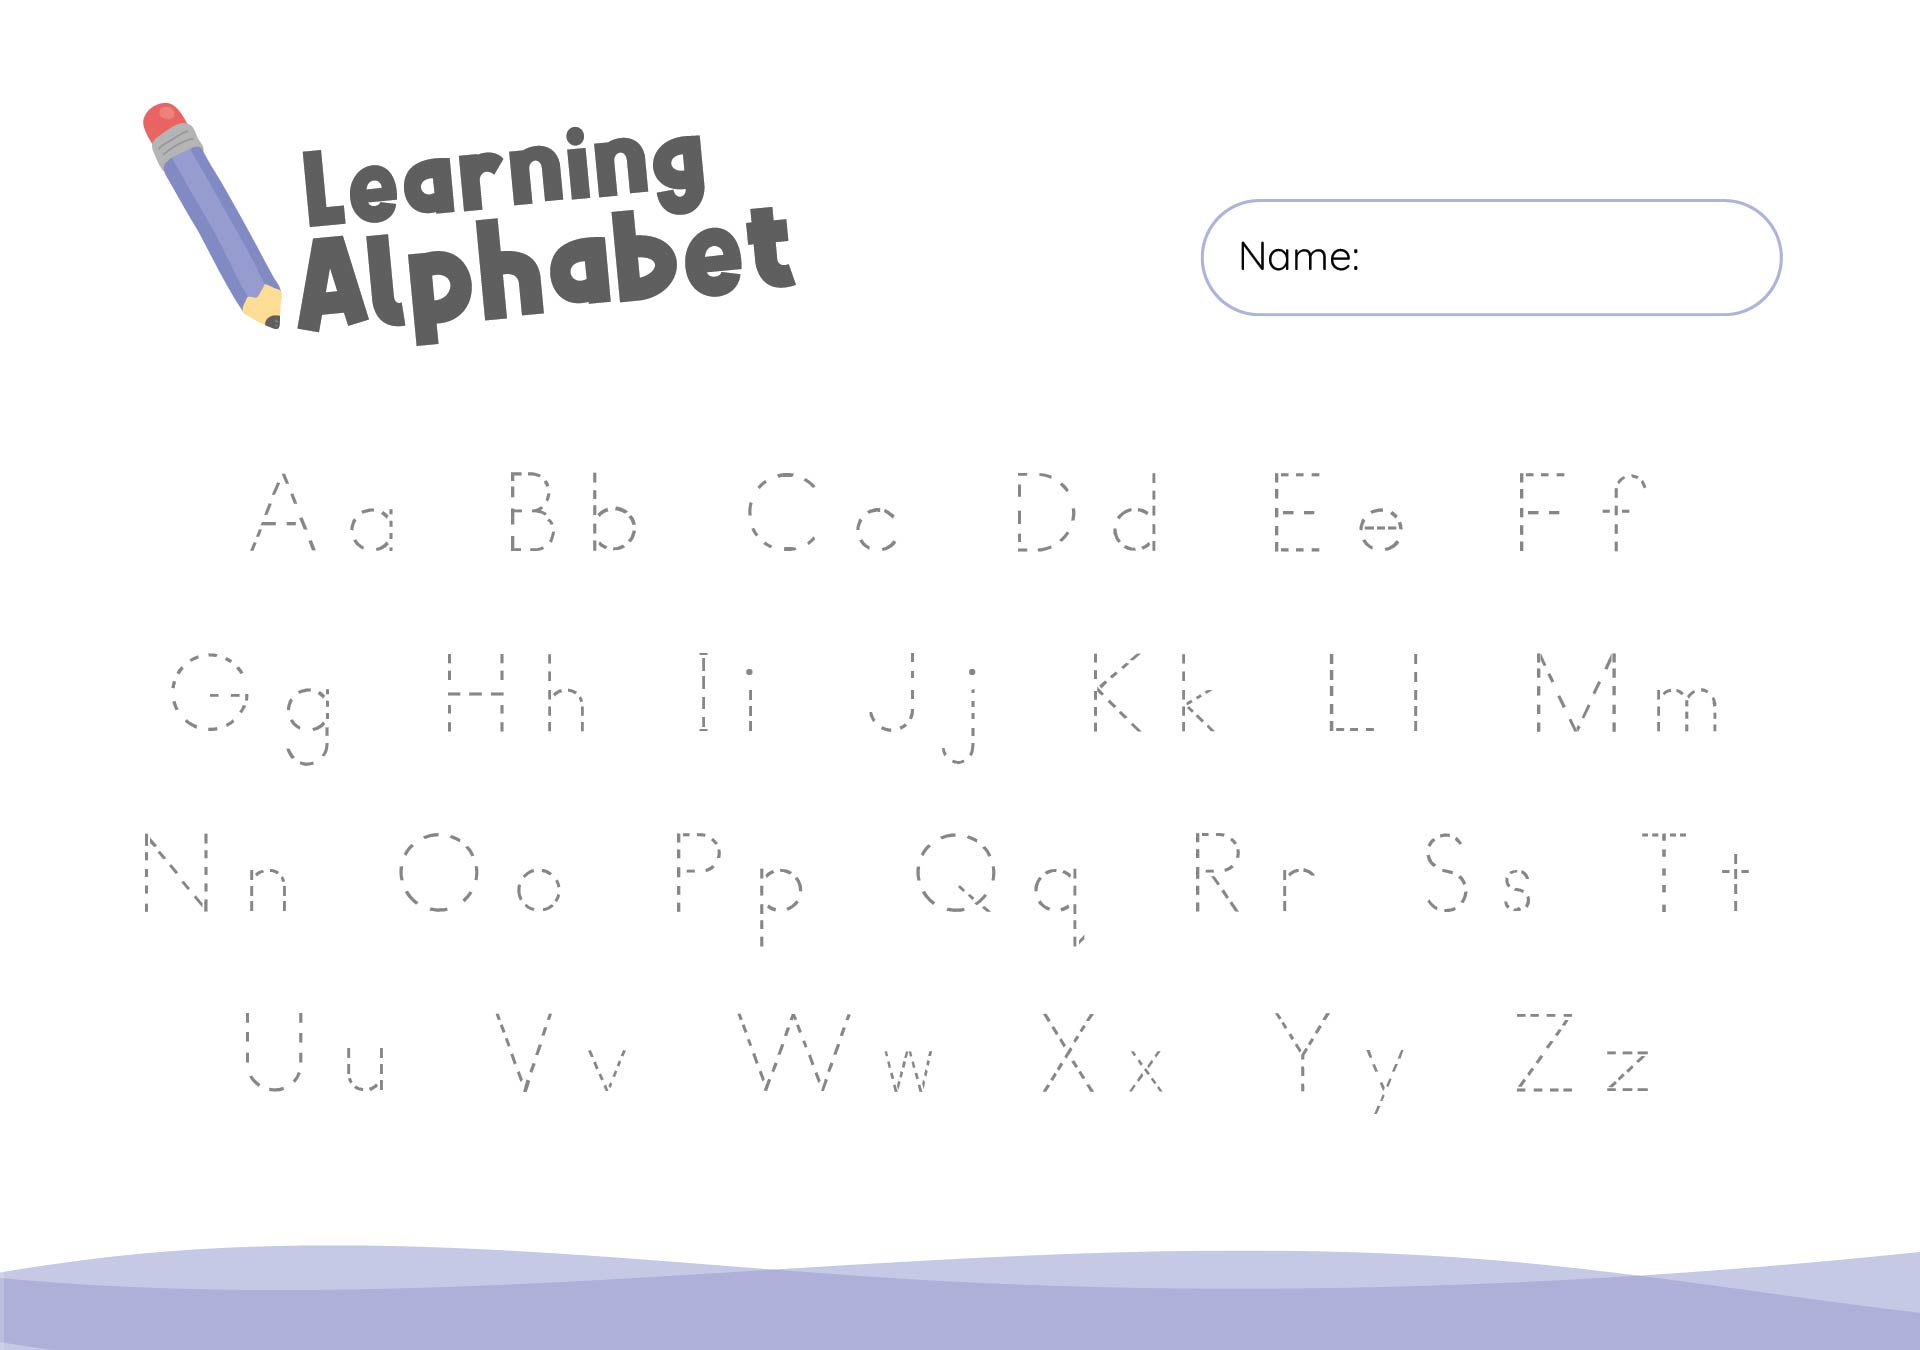 Printable Alphabet Letter Tracing Worksheets